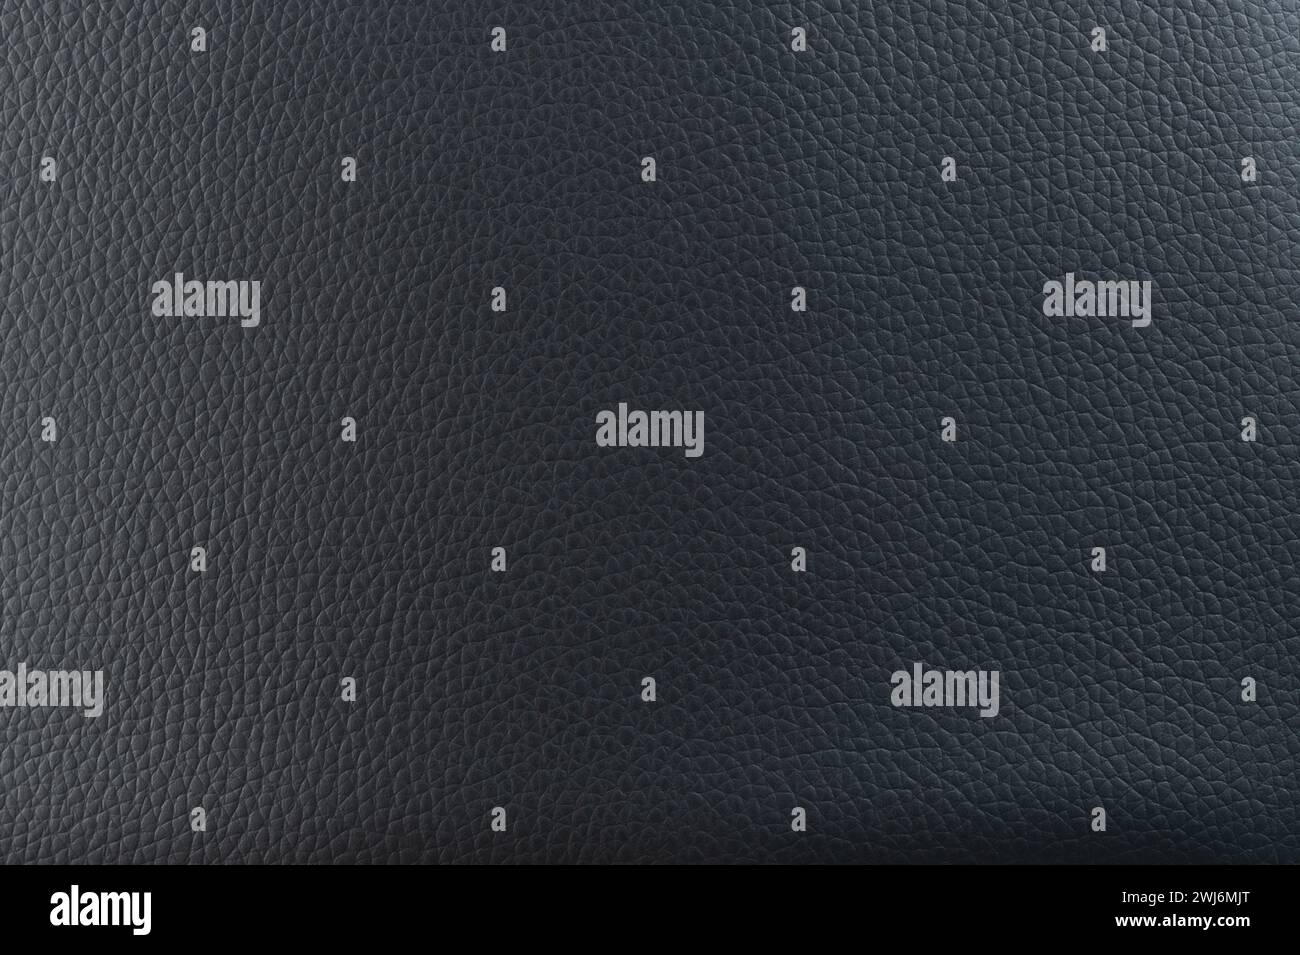 Bright shiny leather bumpy background macro close up view Stock Photo